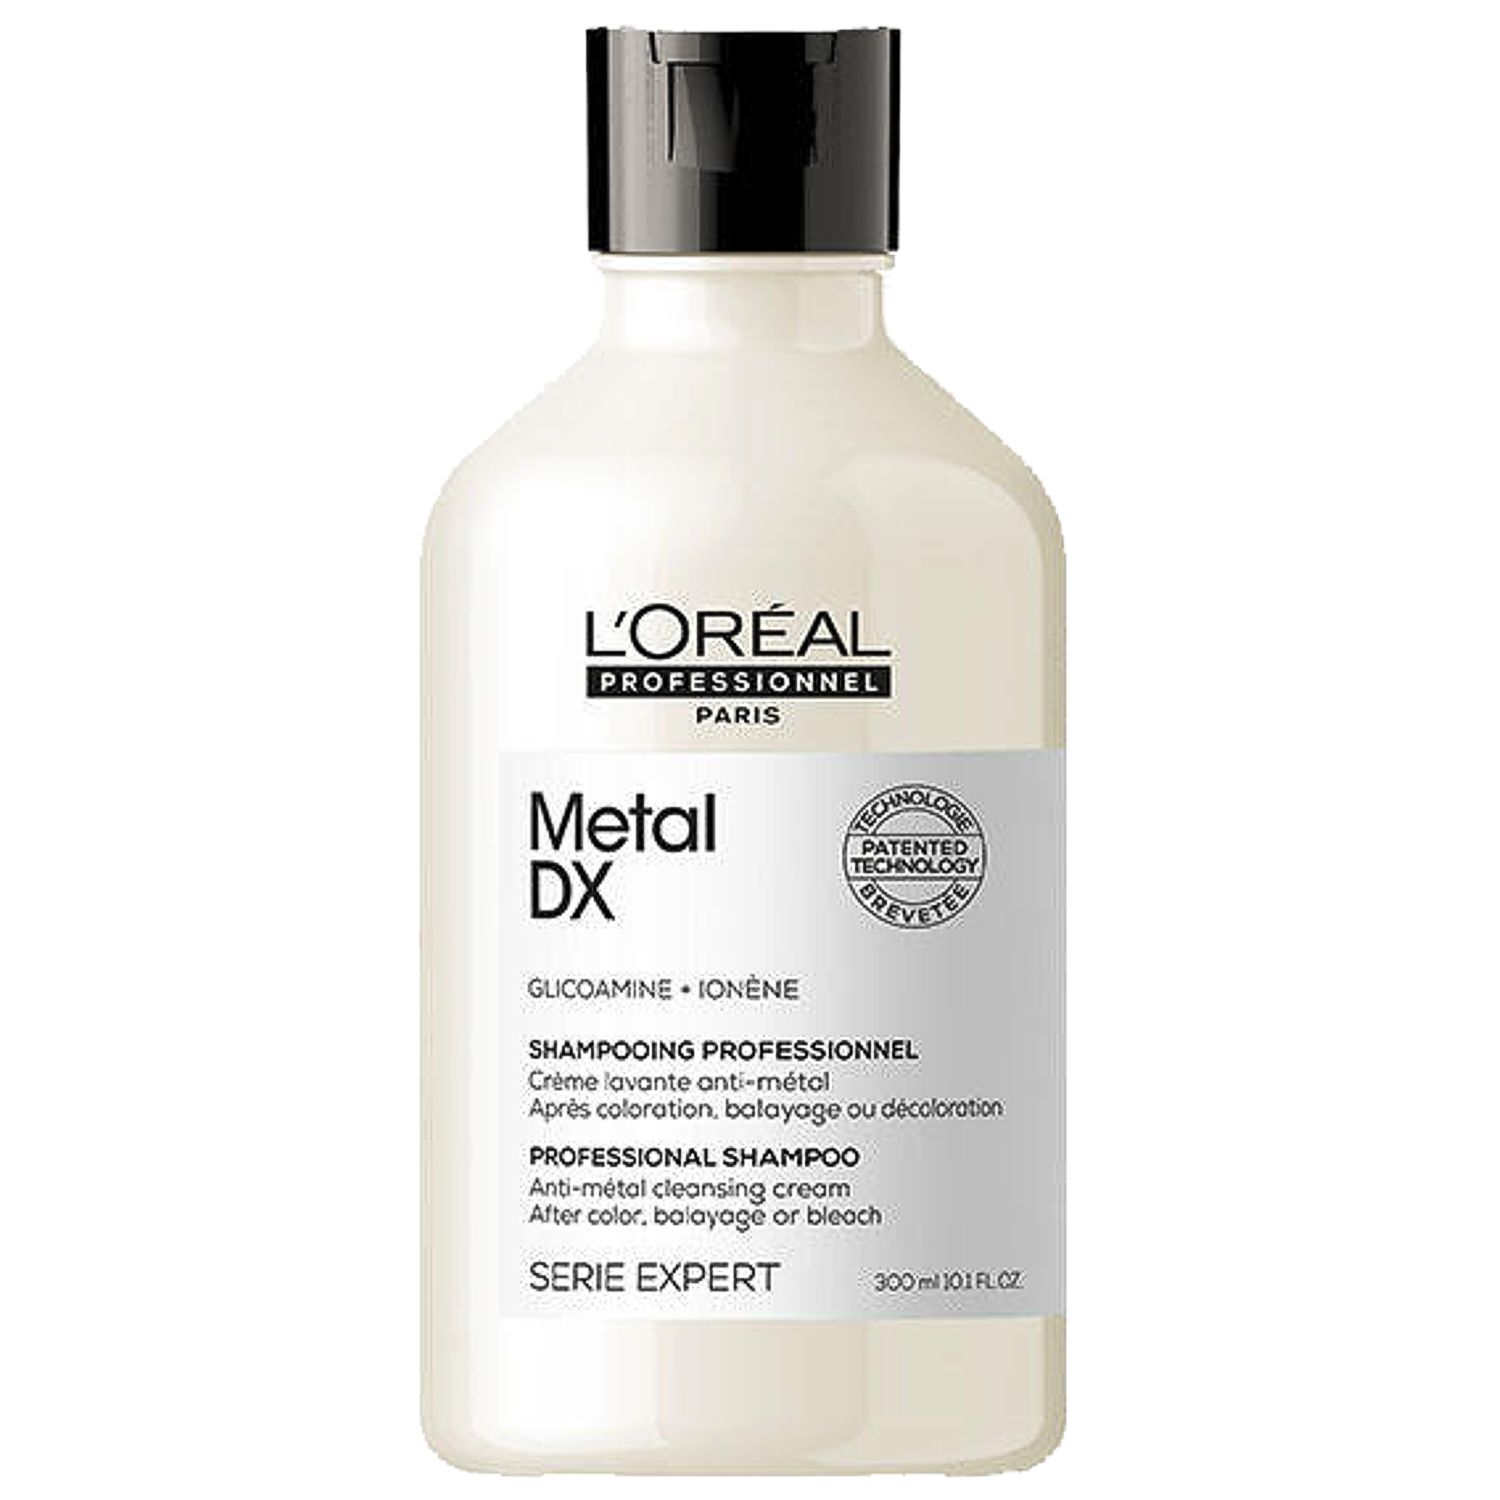 L'ORÉAL Expert METAL DX Professional Shampoo 300 ml